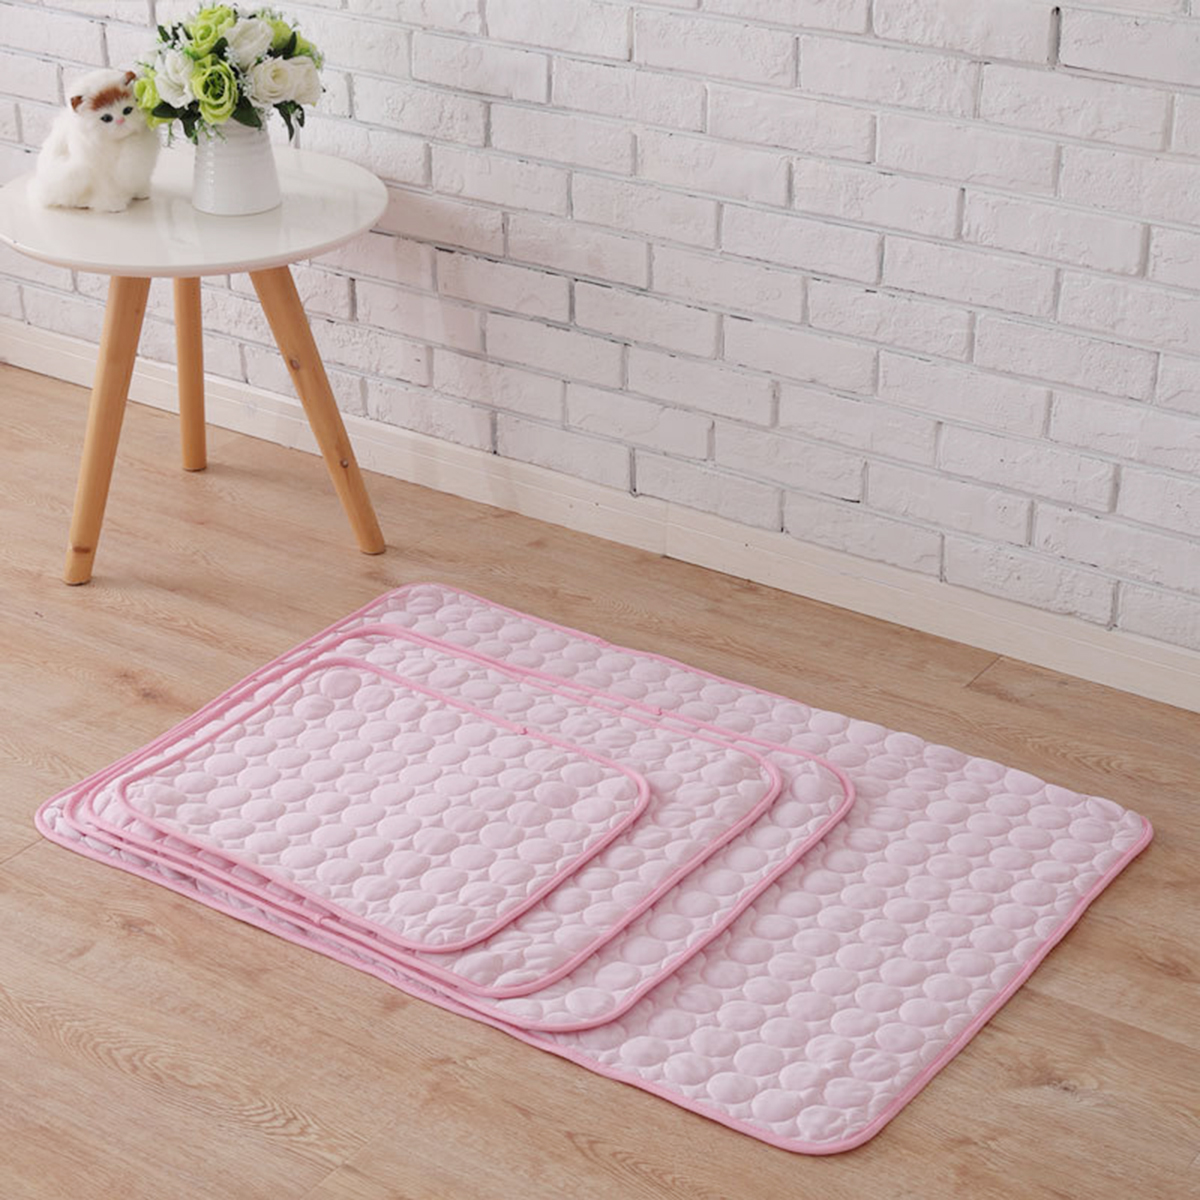 Pink-Dog-Pet-Cat-Cooling-Mat-Summer-Cool-Bed-Pad-Cushion-Heat-Relief-Net-Cotton-Pet-Carpet-1310166-6